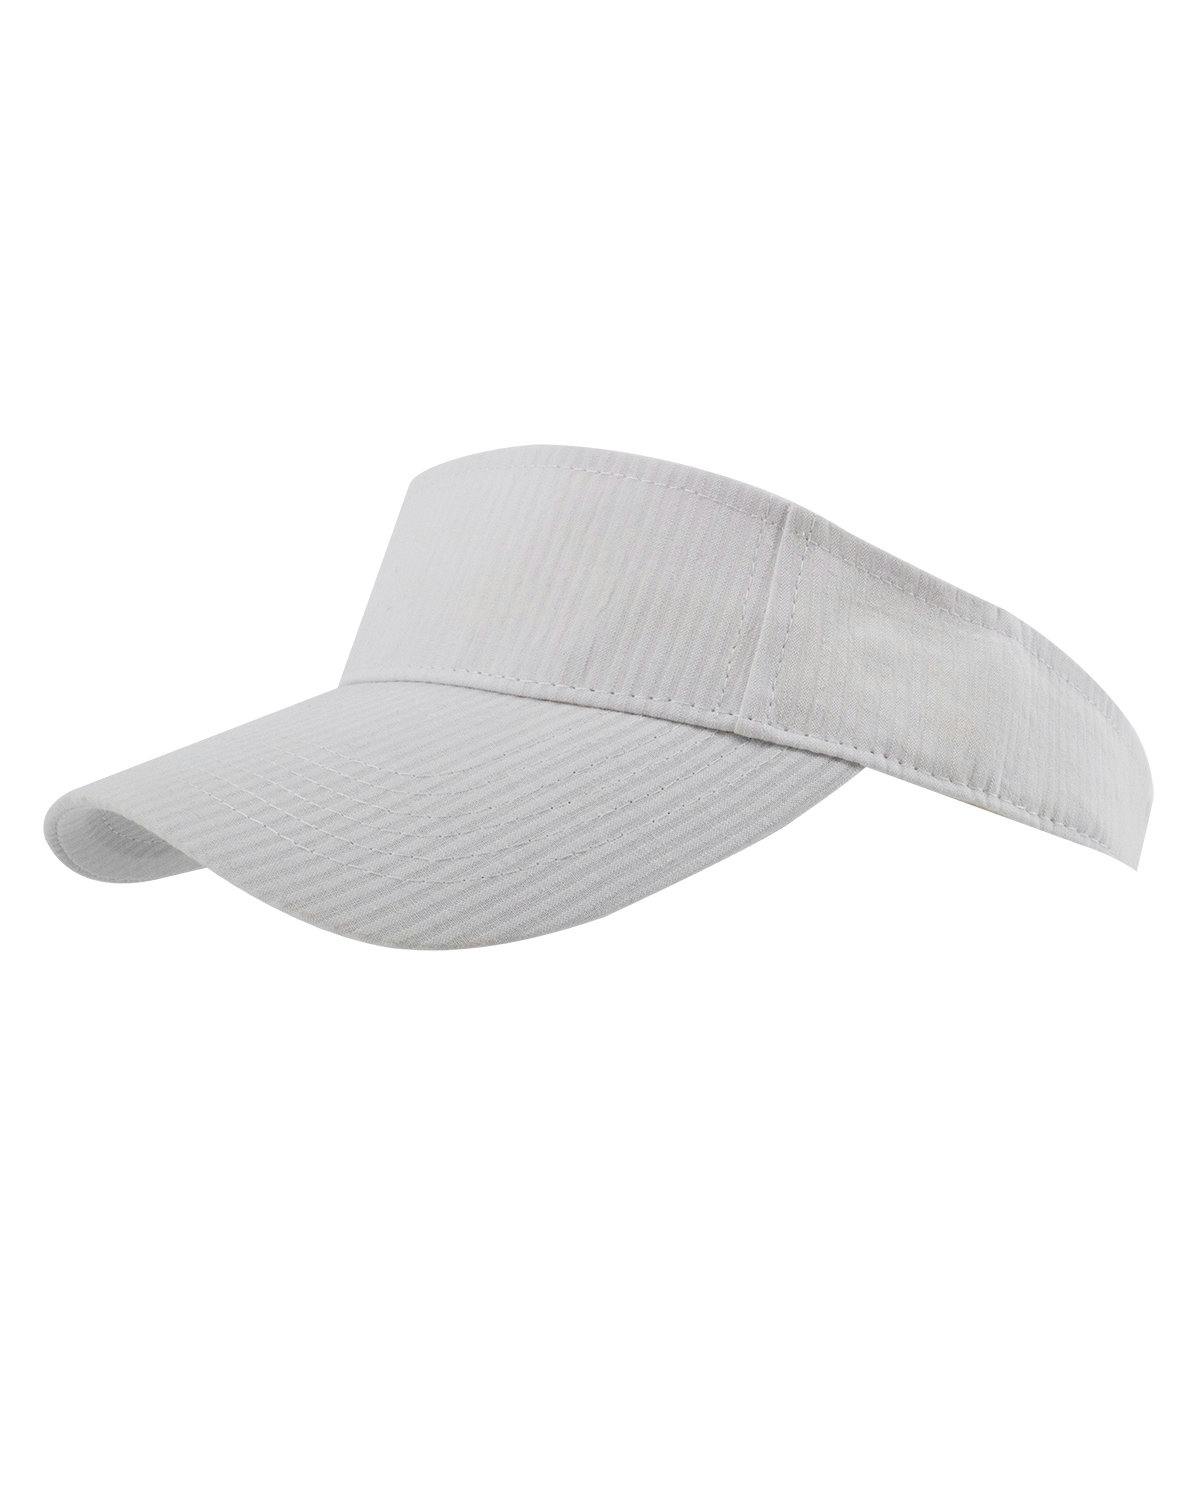 Image for Lightweight Cotton Searsucker Hat